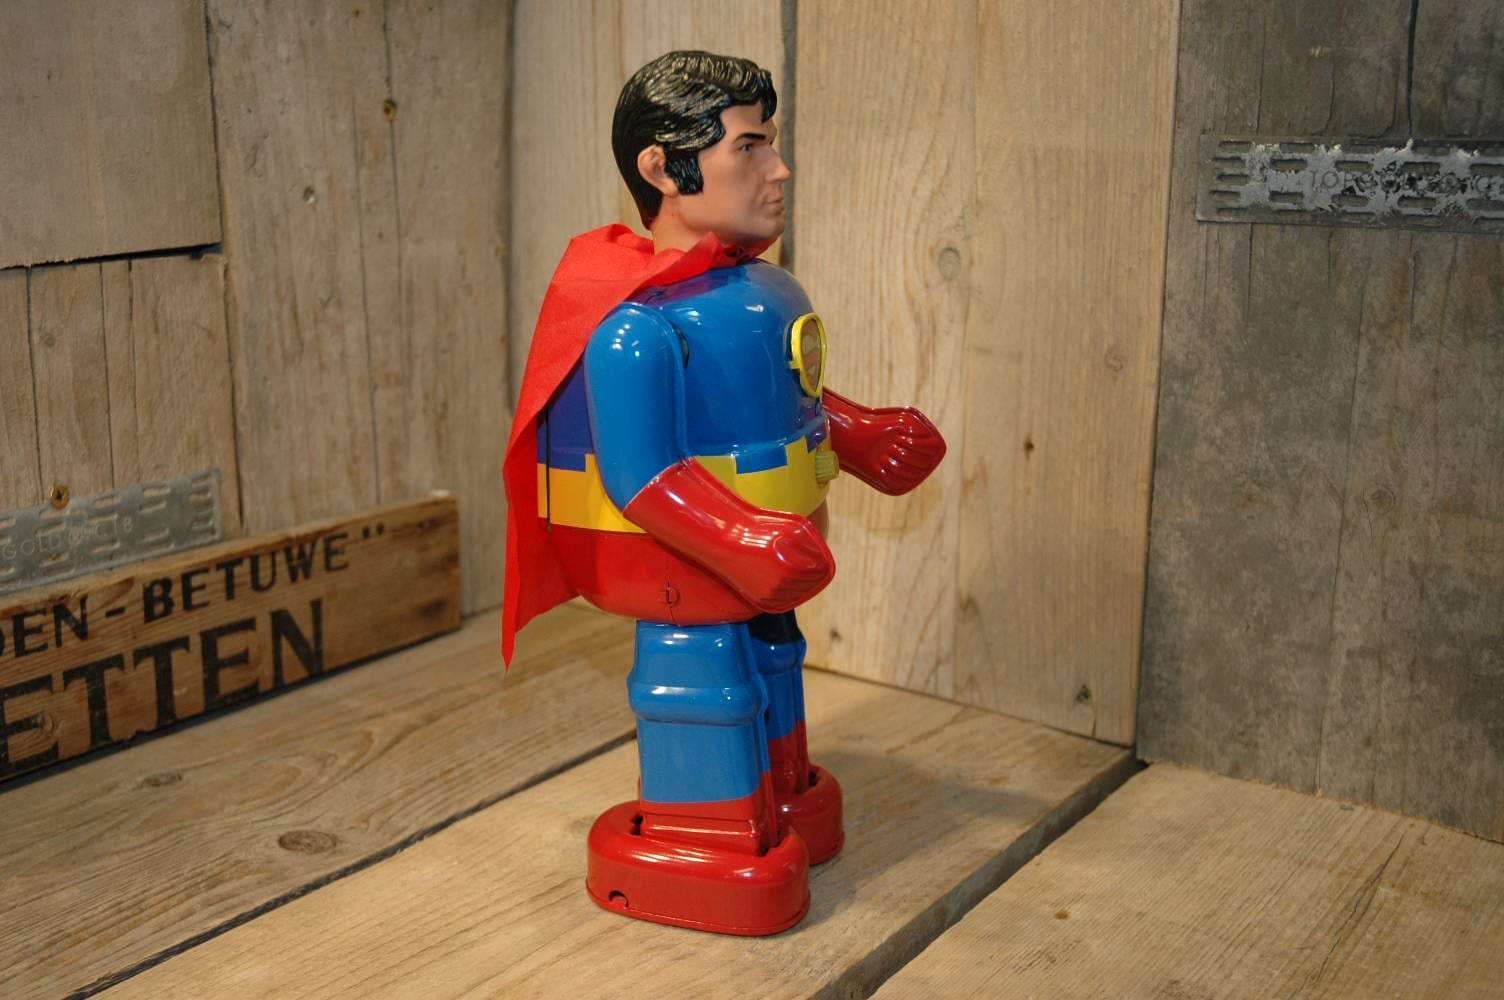 Papa San - Superman Prototype